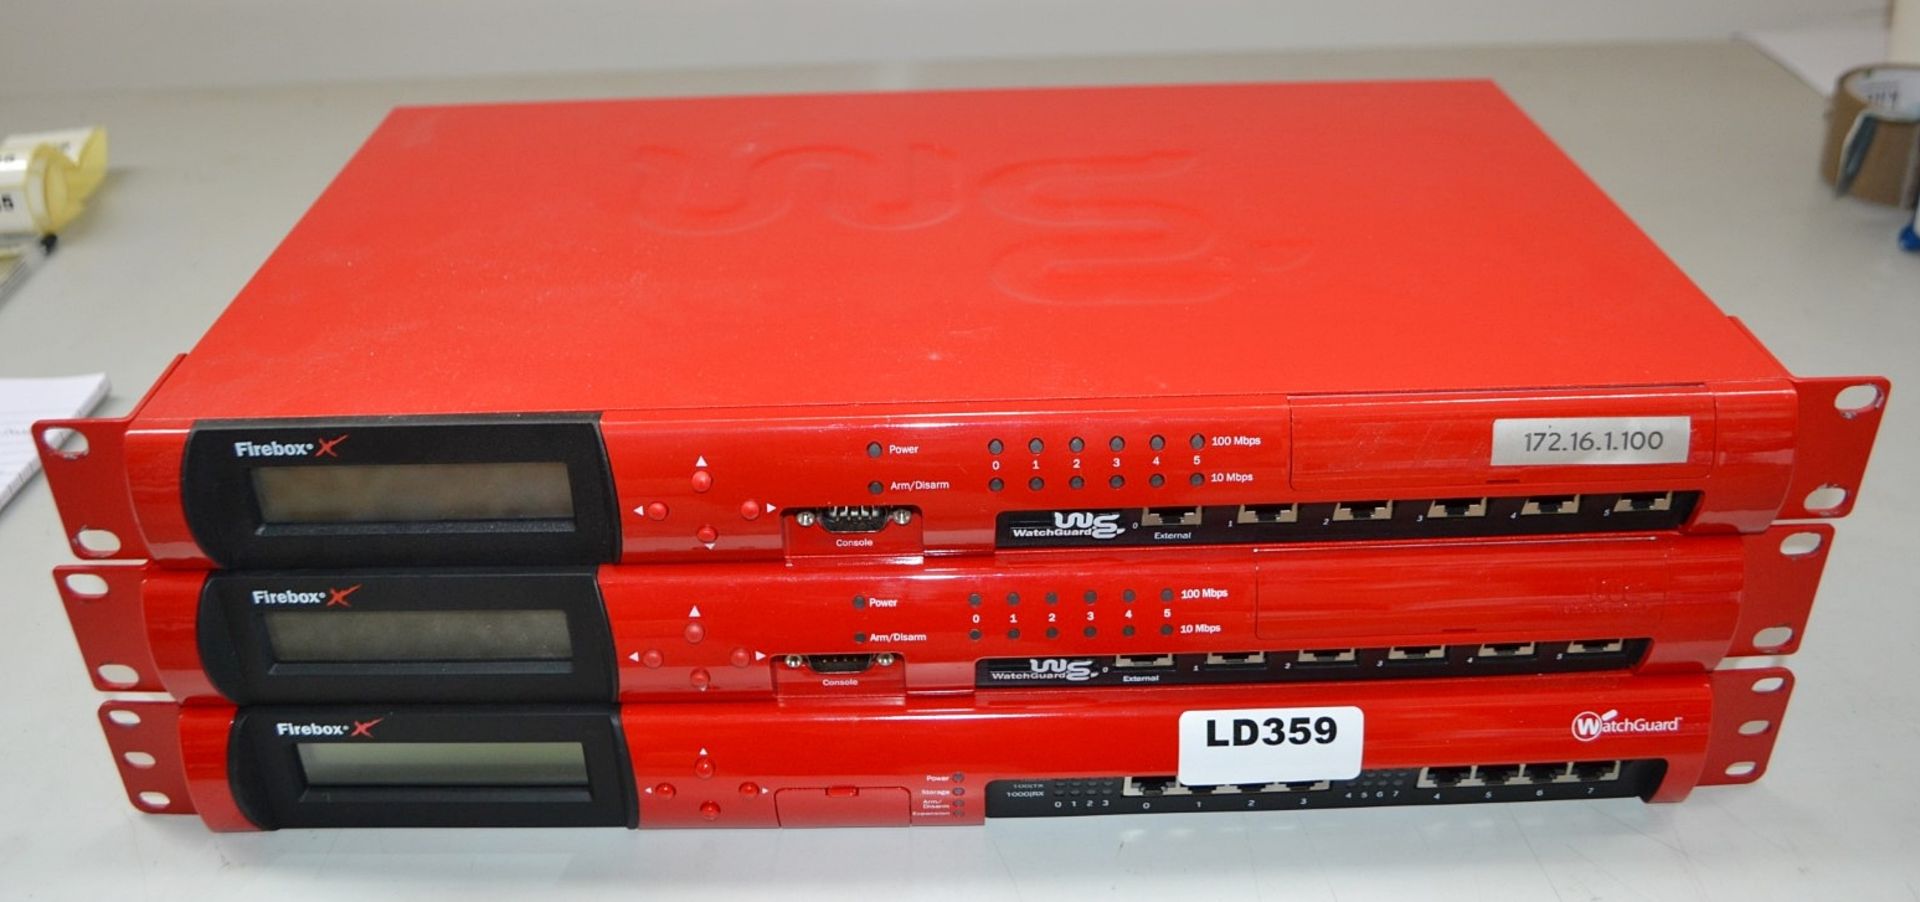 3 x Red Watchguard Firebox Security System's - Ref: LD359 - CL409 - Altrincham WA14